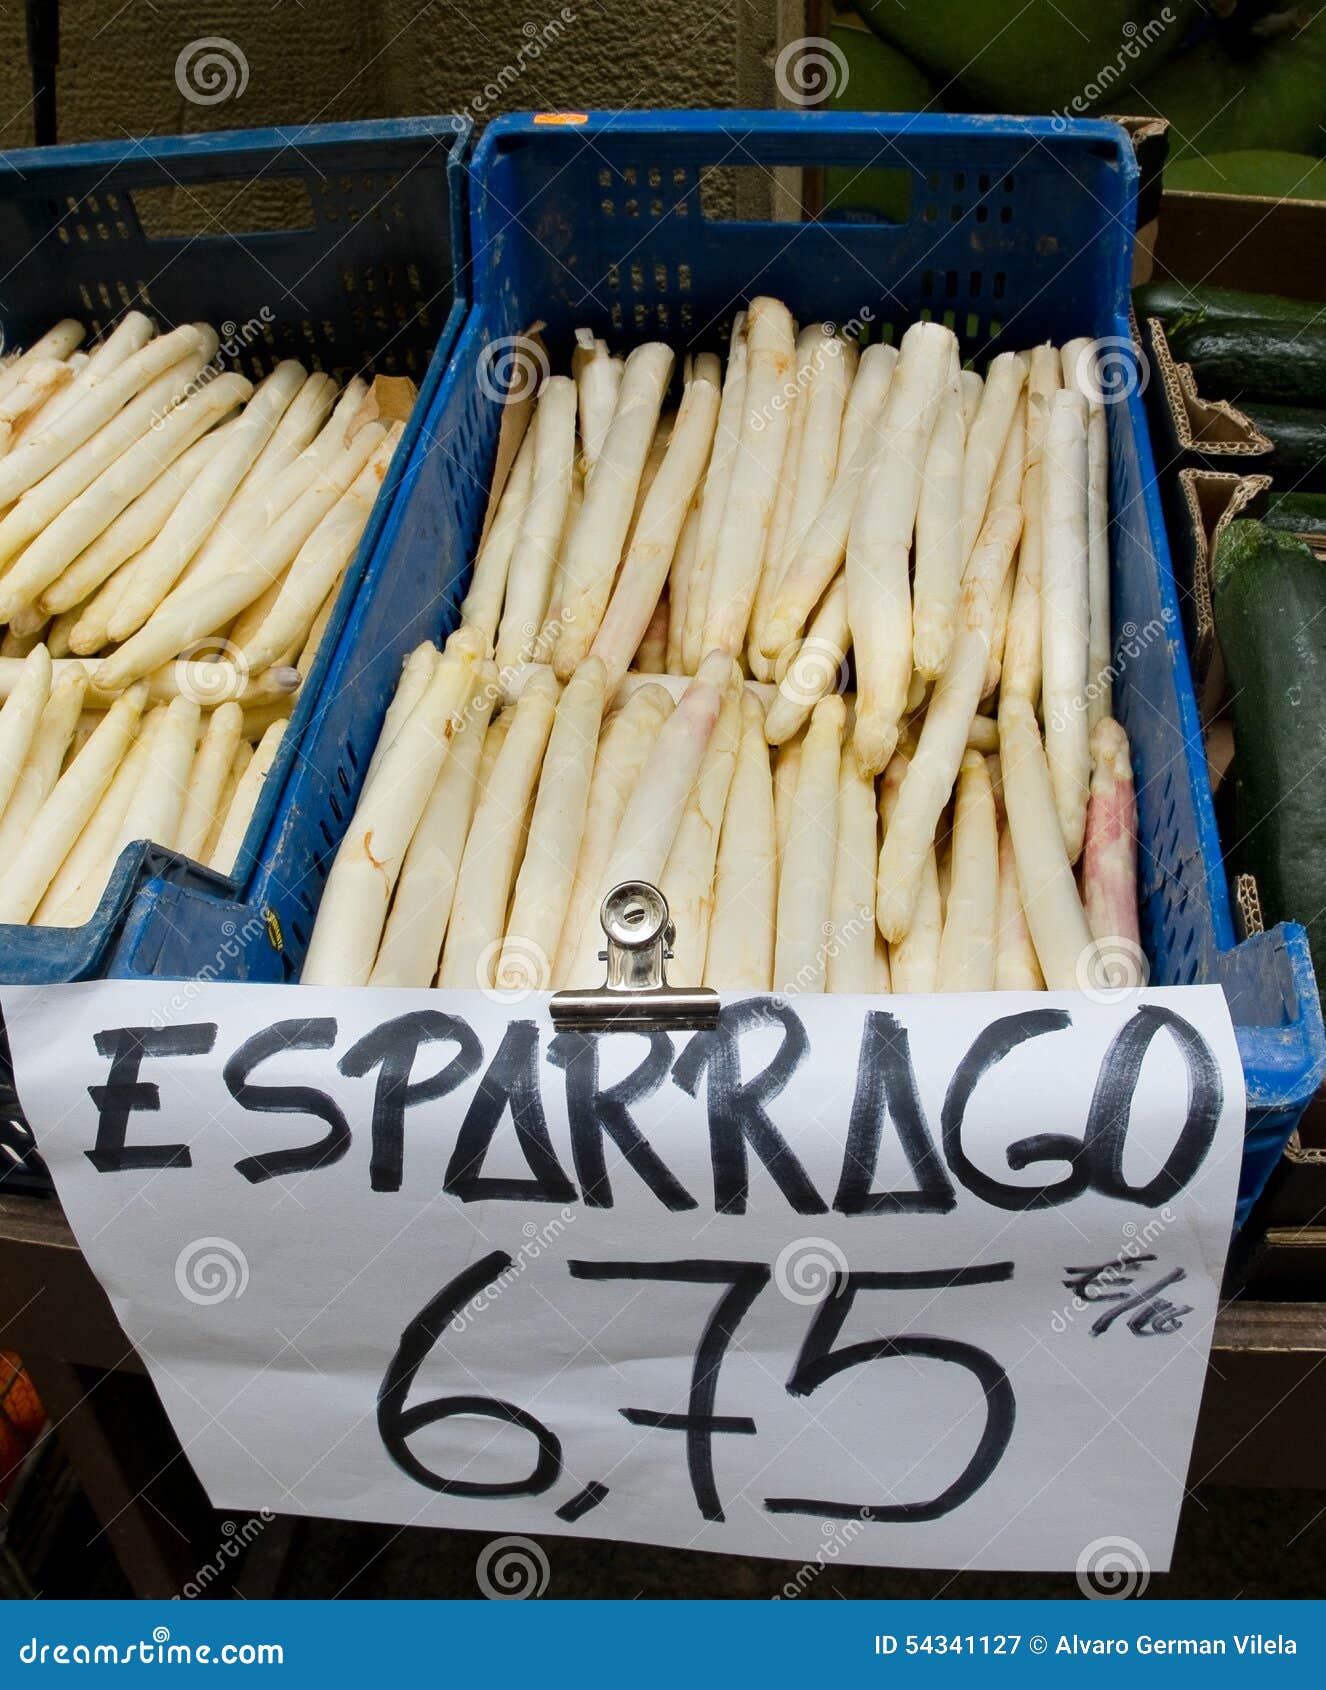 white asparagus in a market.